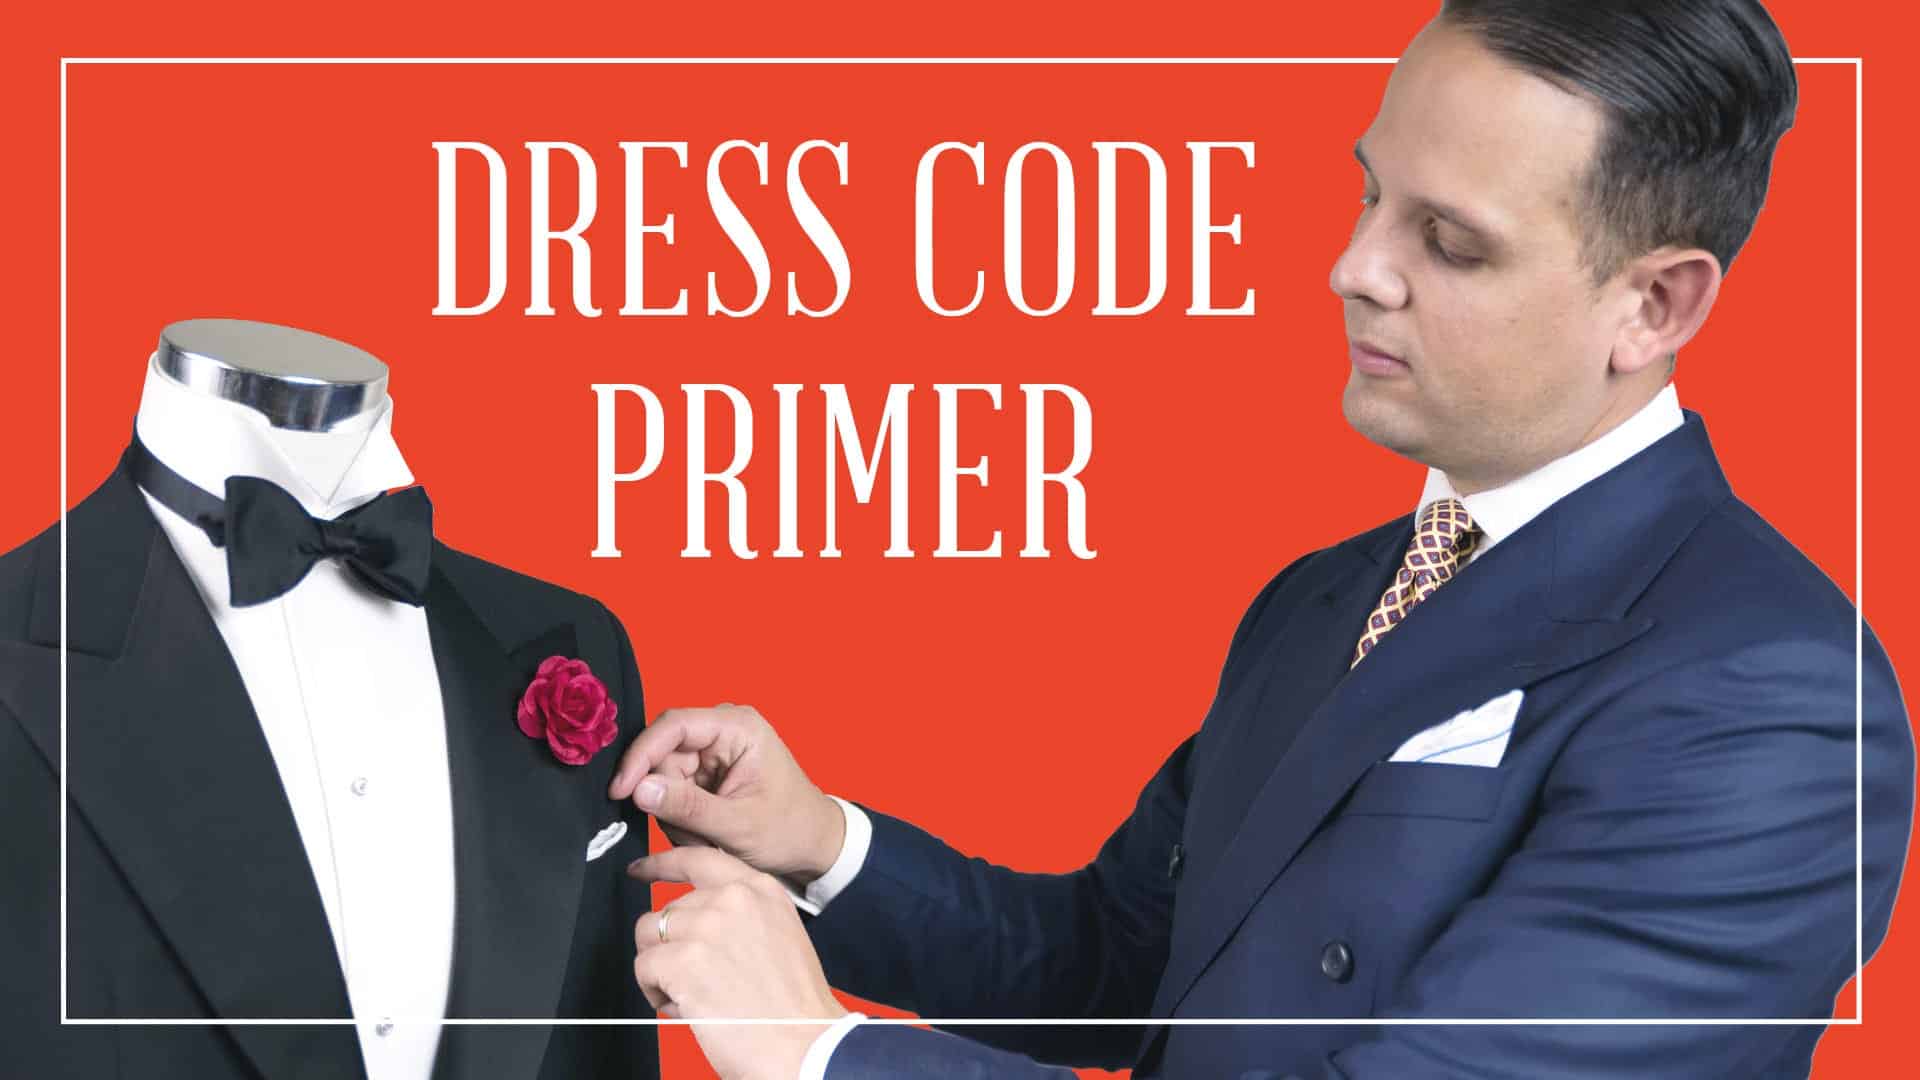 The Dress Code Primer